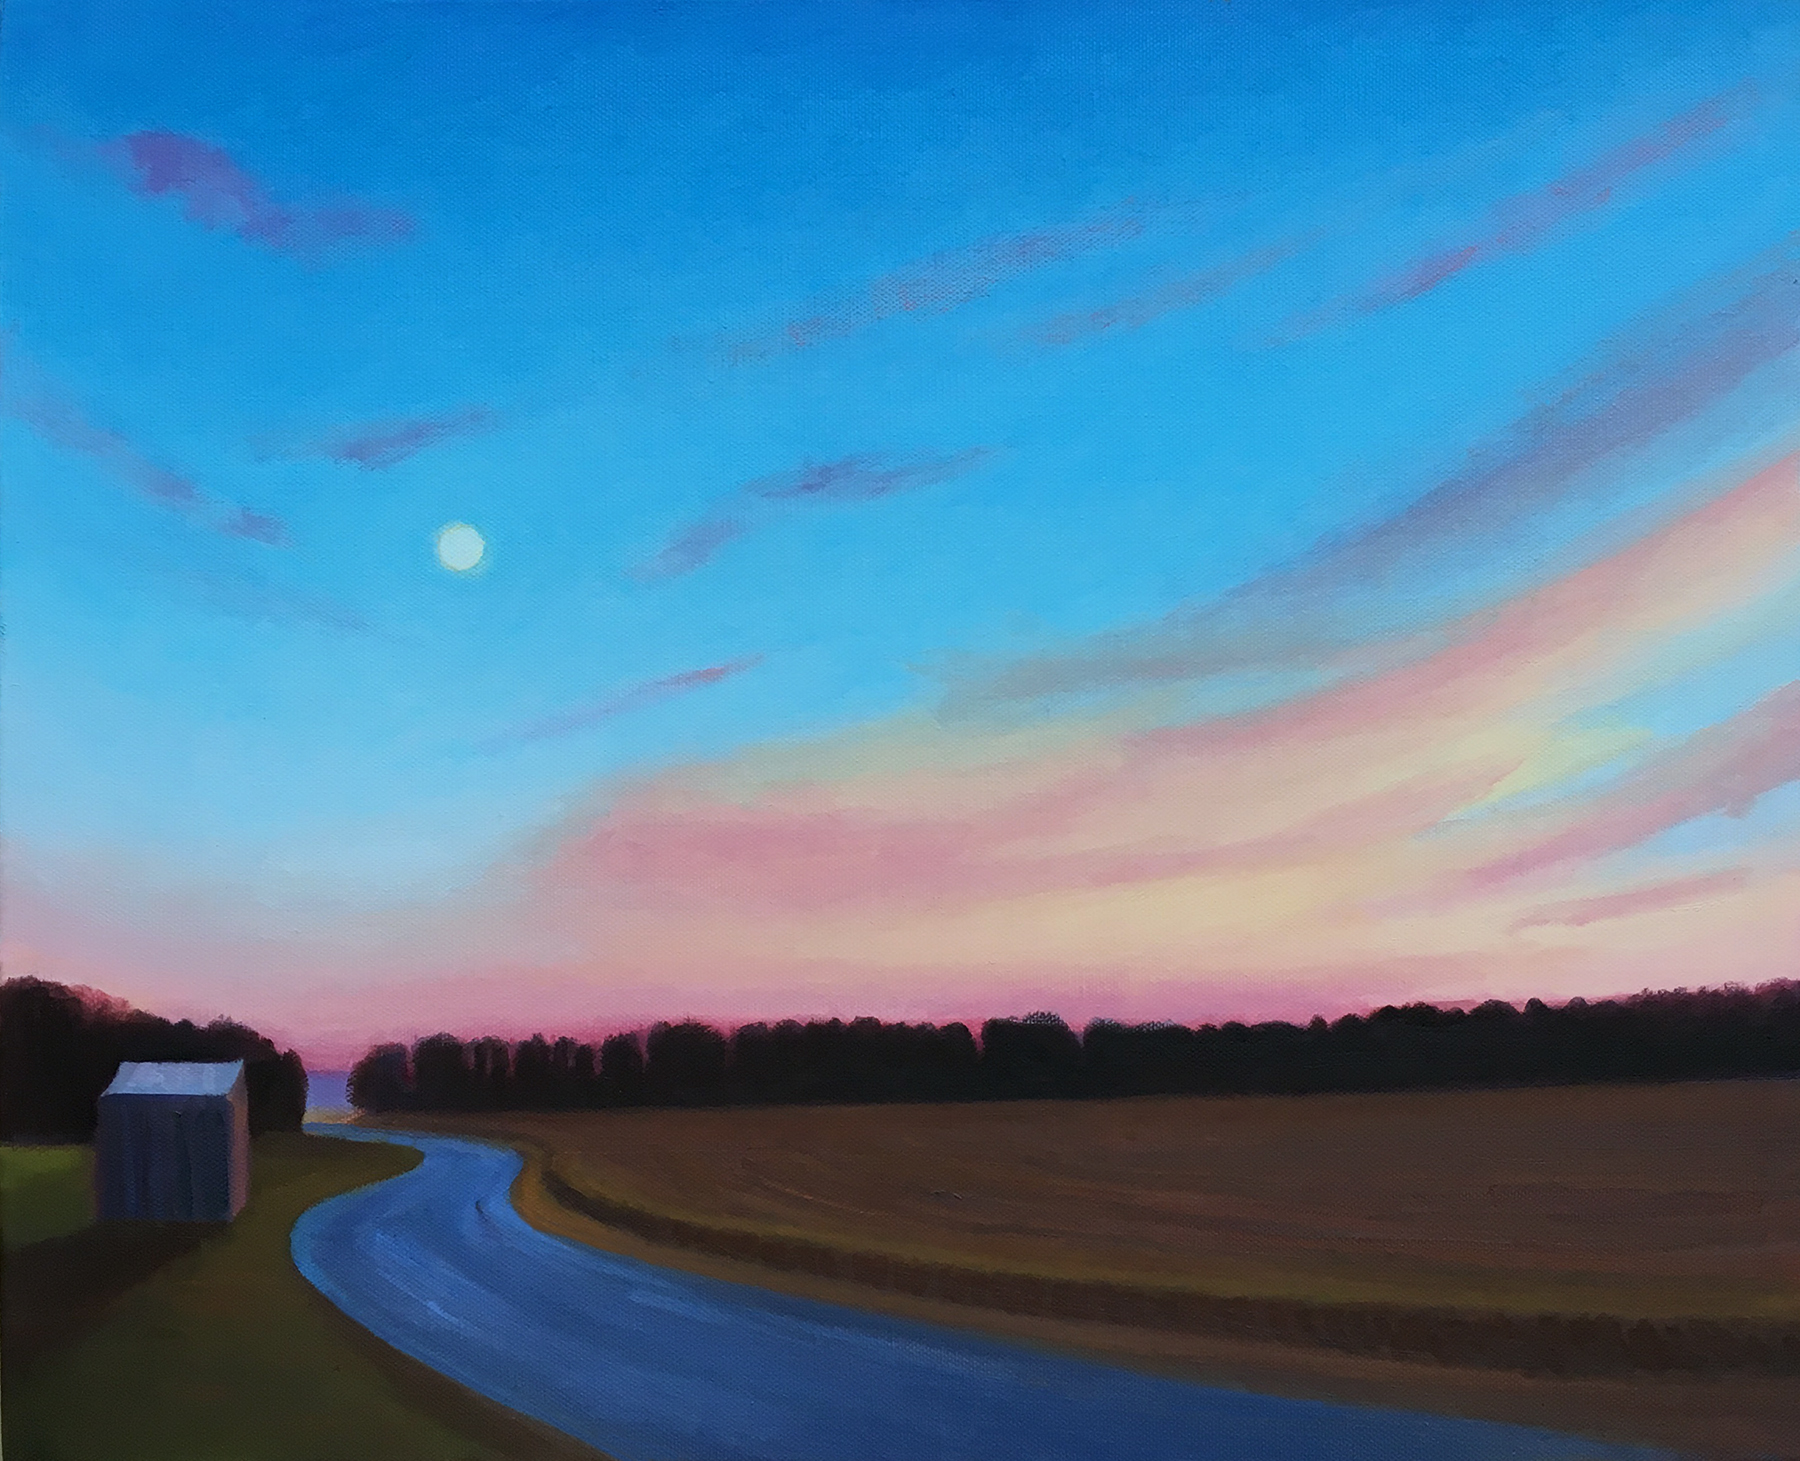 Harvest Moonrise by David Davenport 16X20 oil on canvas at Craven Allen Gallery 1500